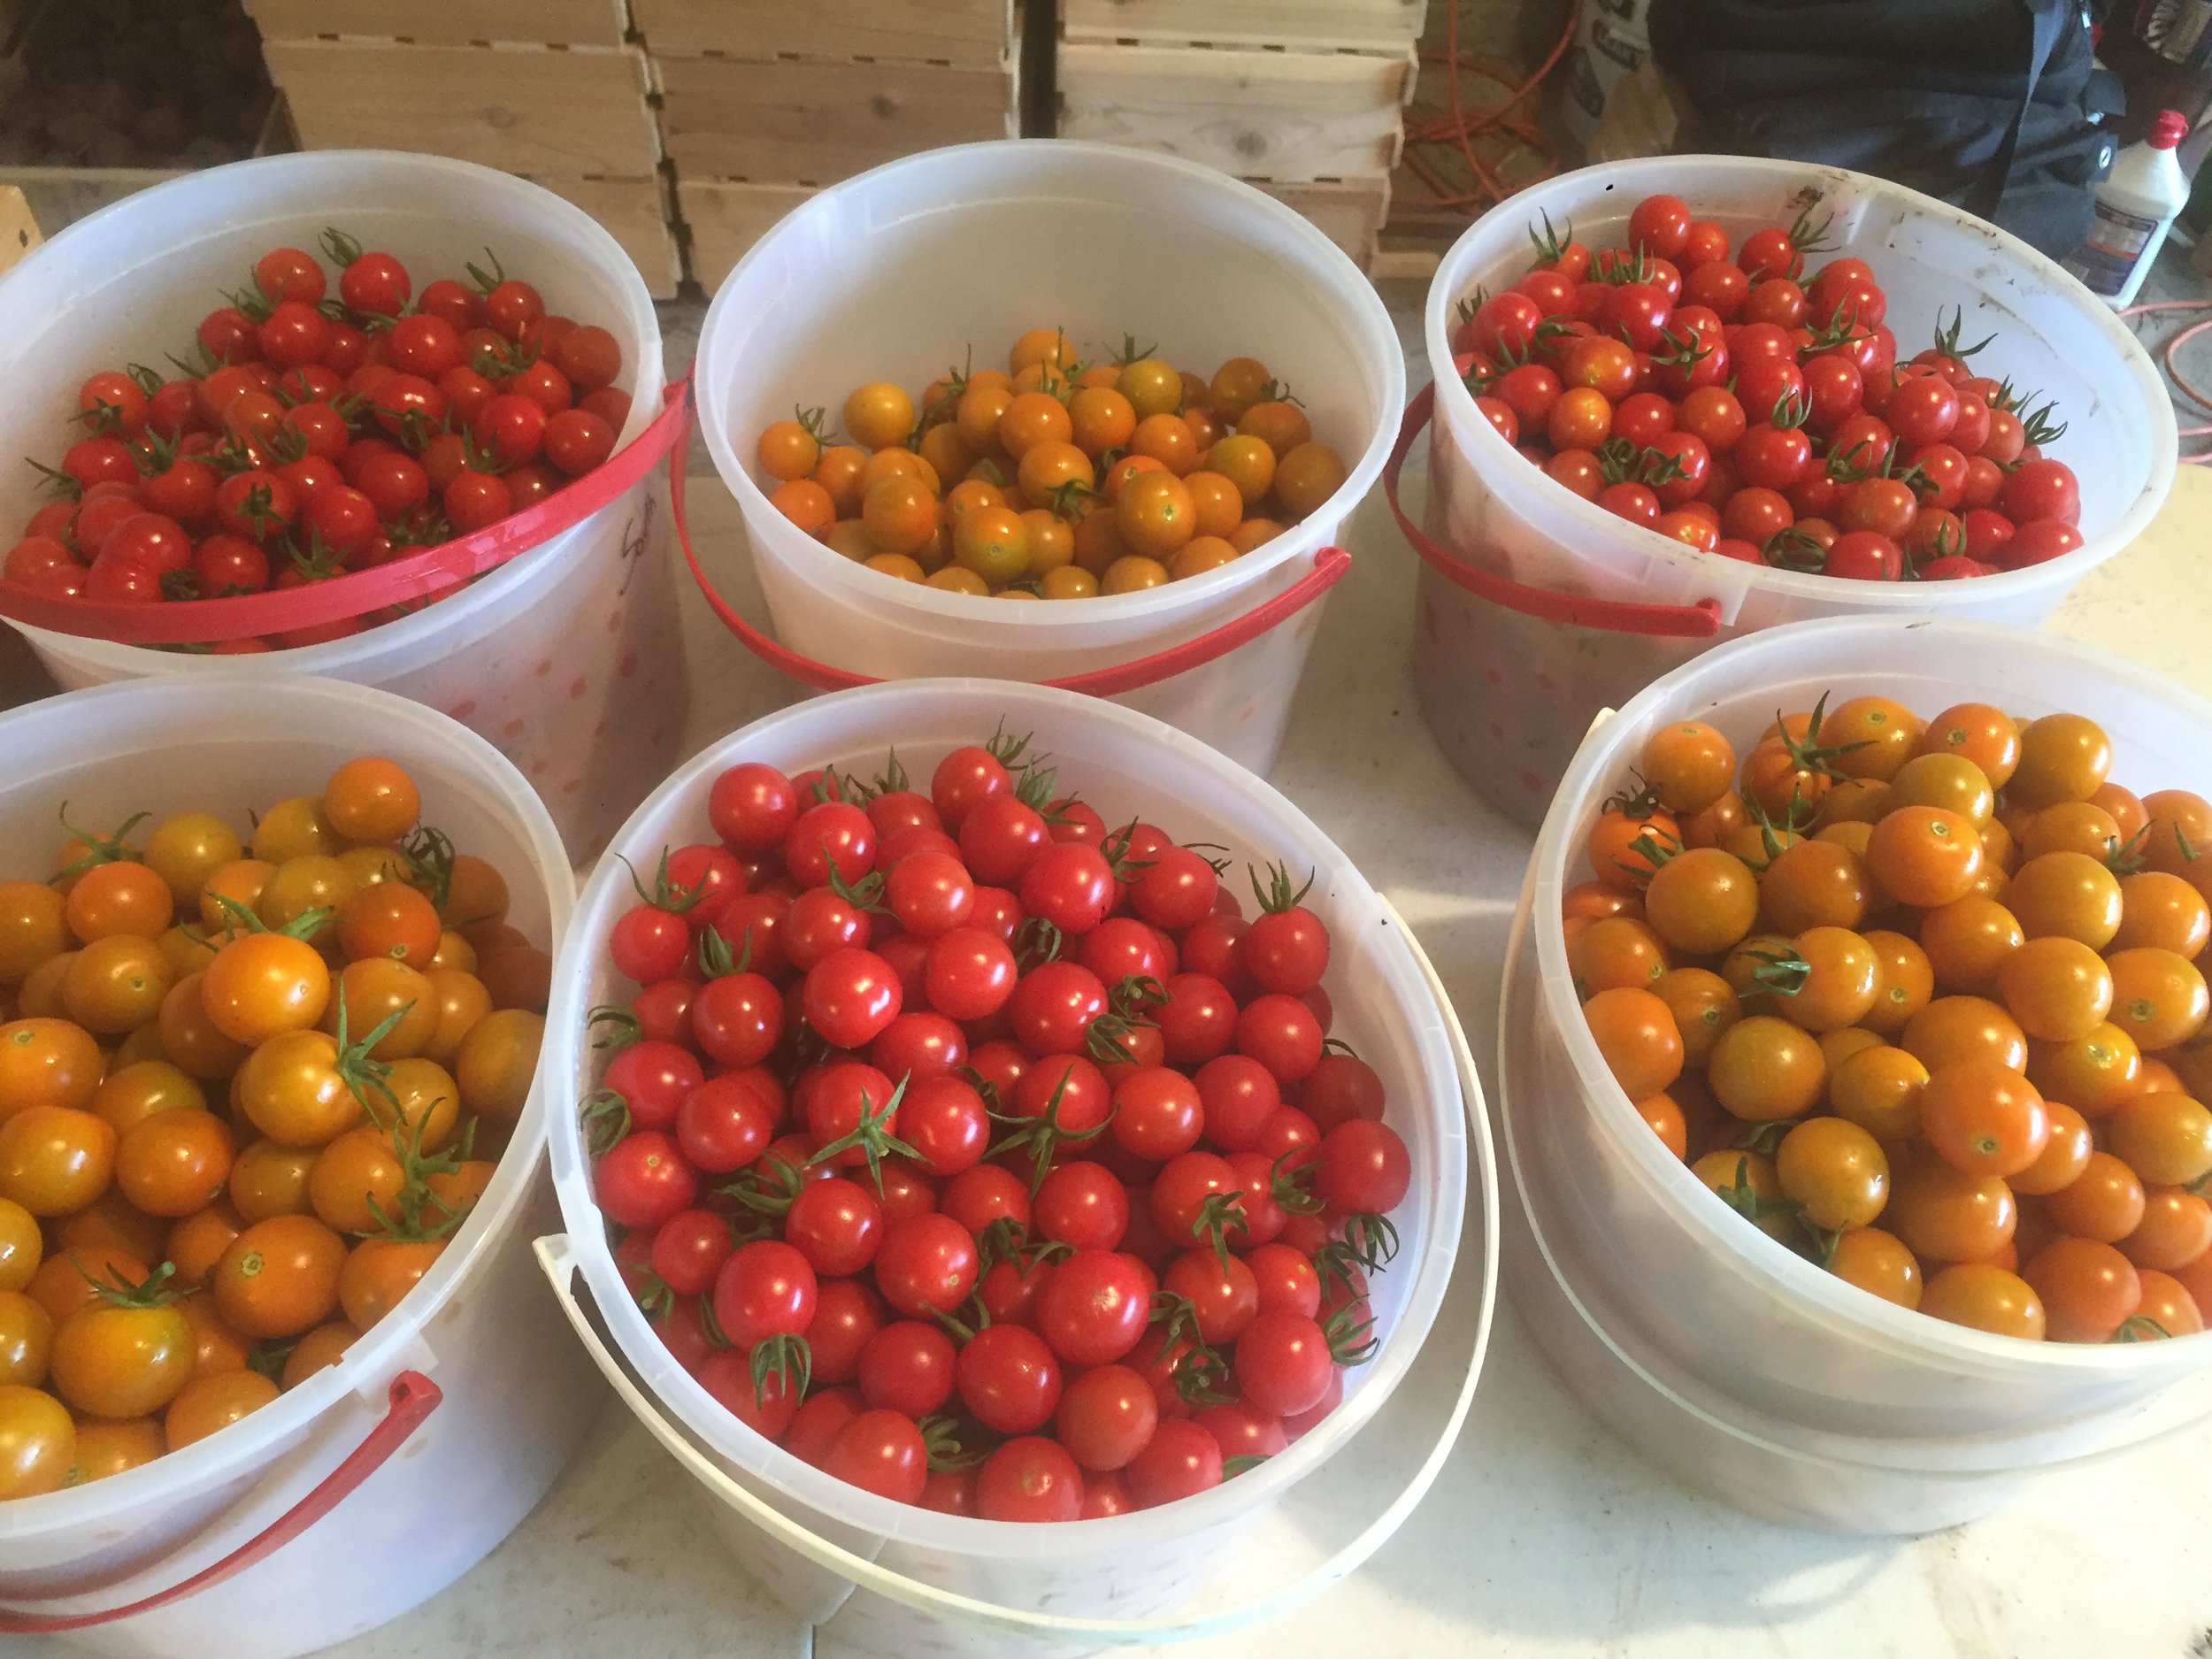  At peak season I would pick around 60lbs of cherry tomatoes a week. 